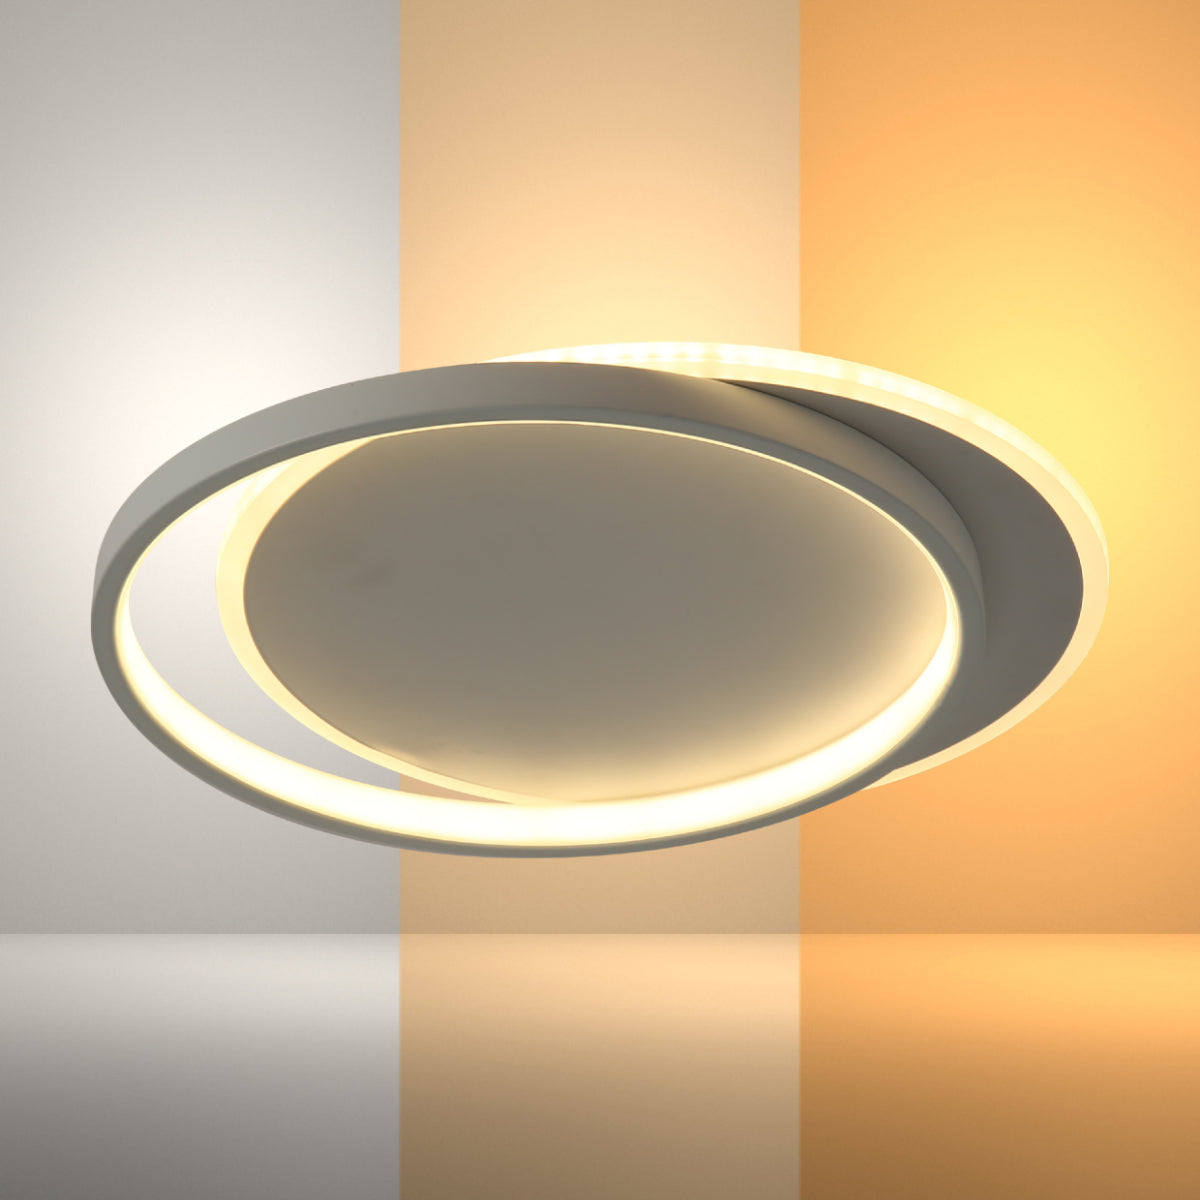 Main image of Dual-Ring LED Flush Ceiling Light 159-18101